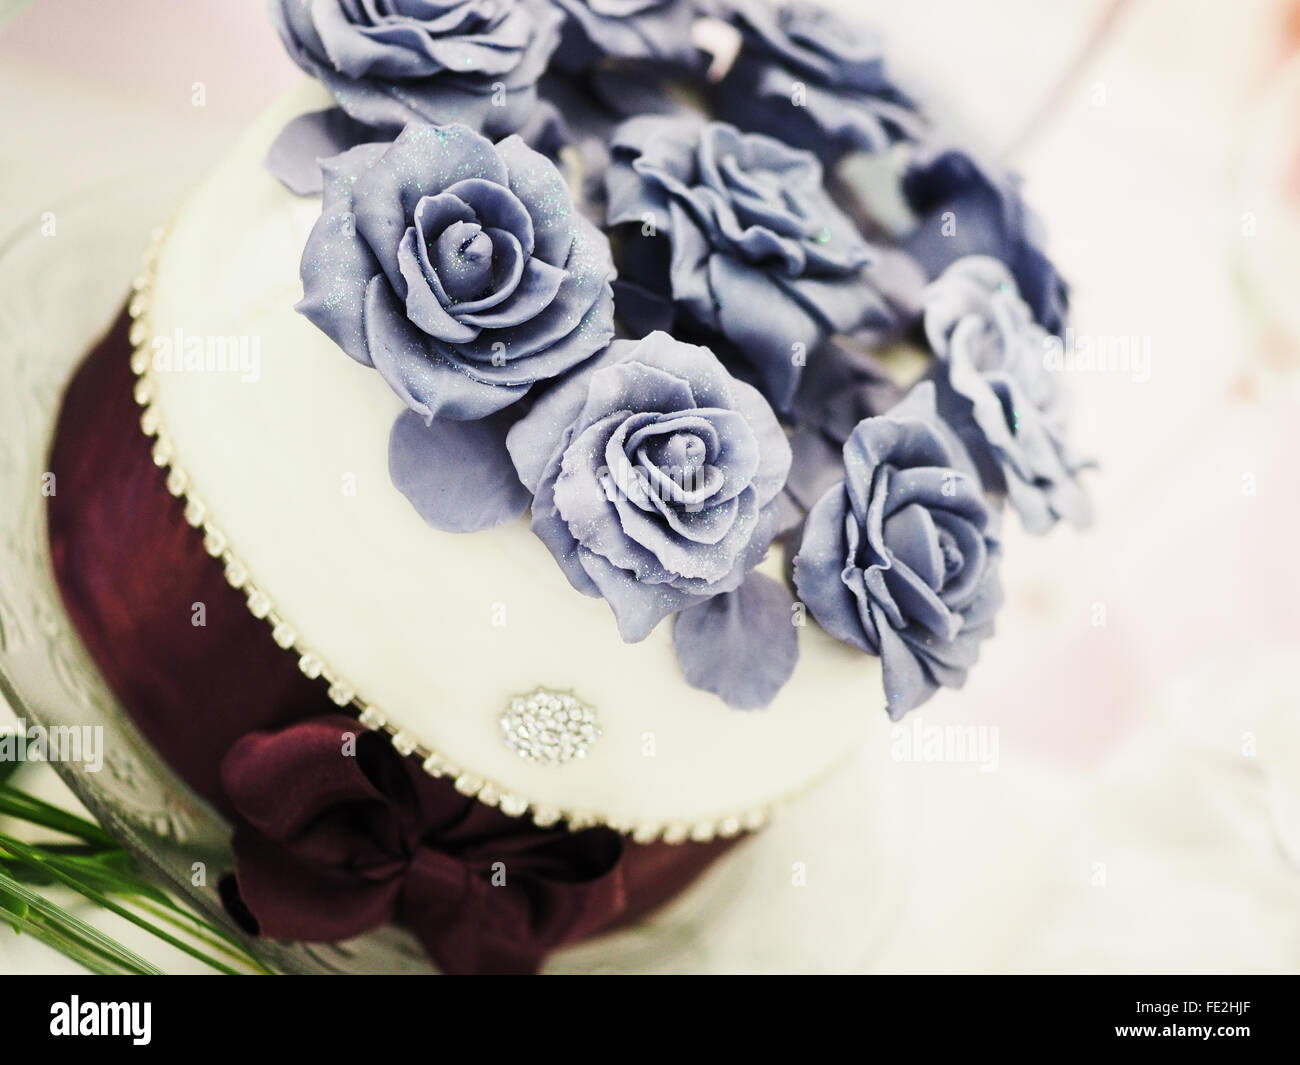 Still life with wedding cake Stock Photo